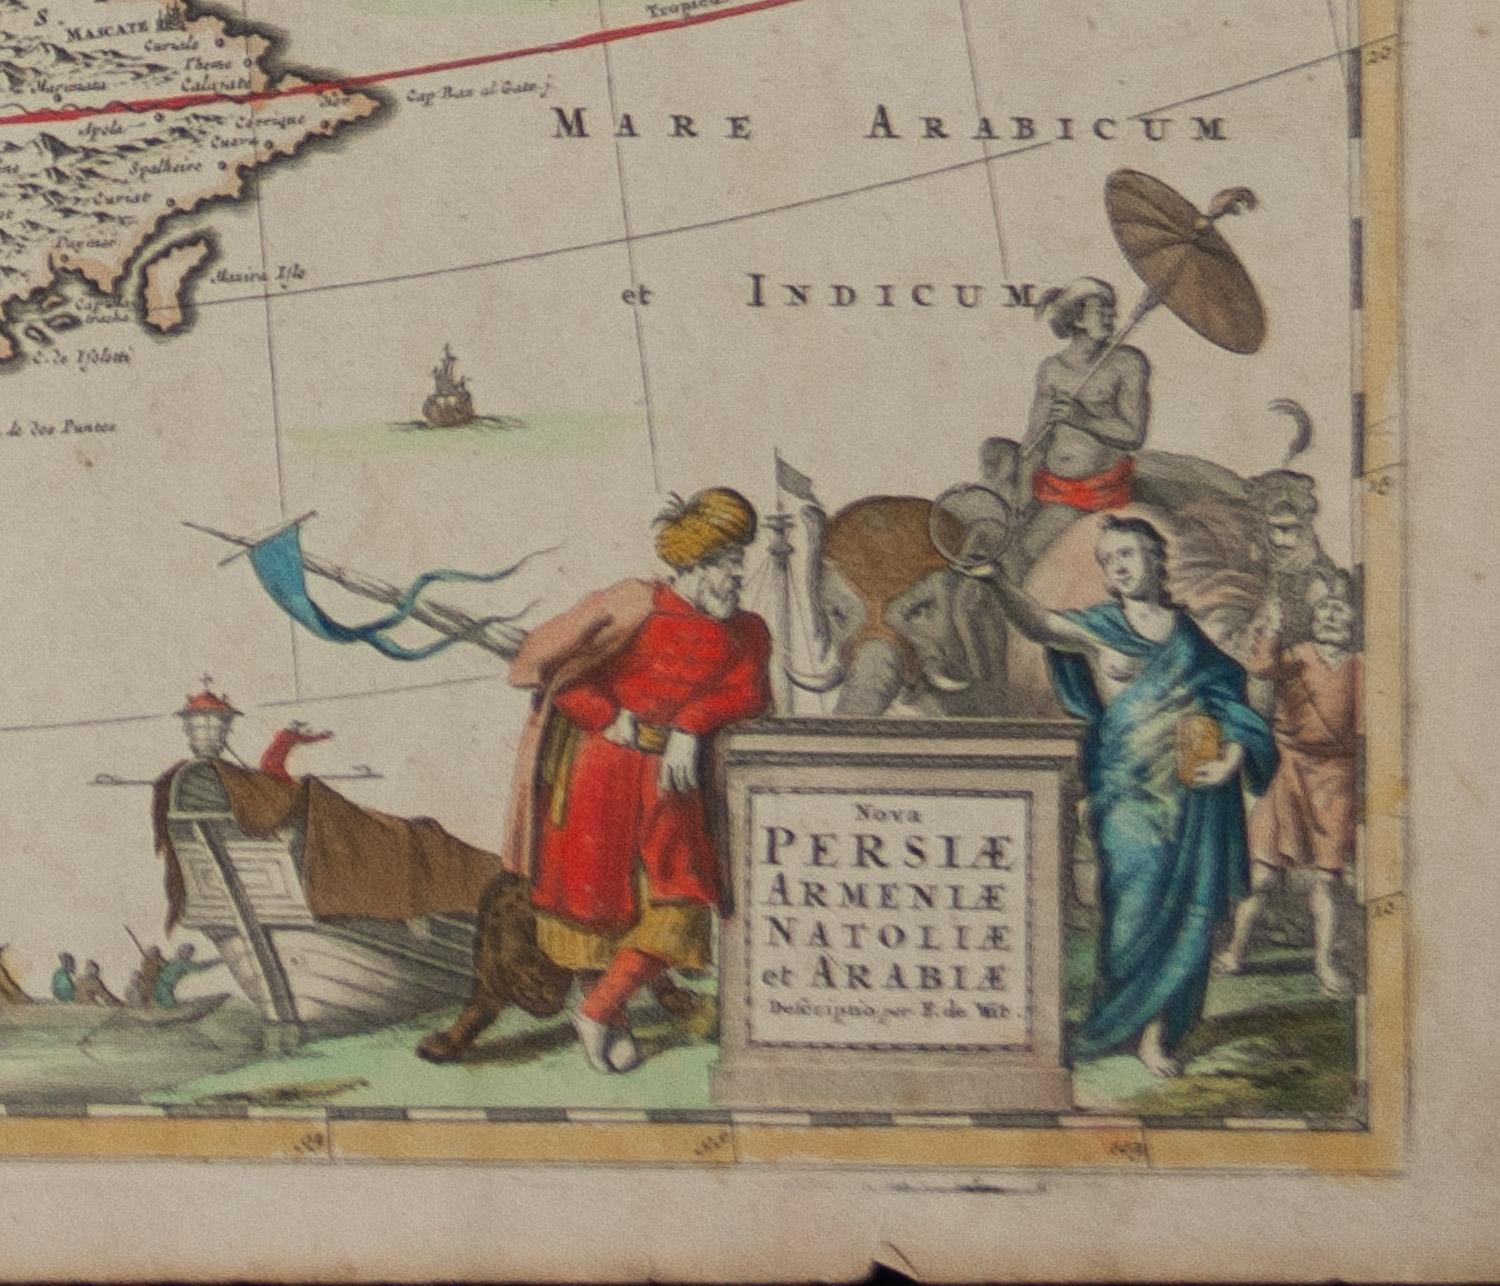  Persien, Armenien, Natoliae et Arabiae Descriptio per Frederick deWit 1666 Karte – Print von Frederick DeWit